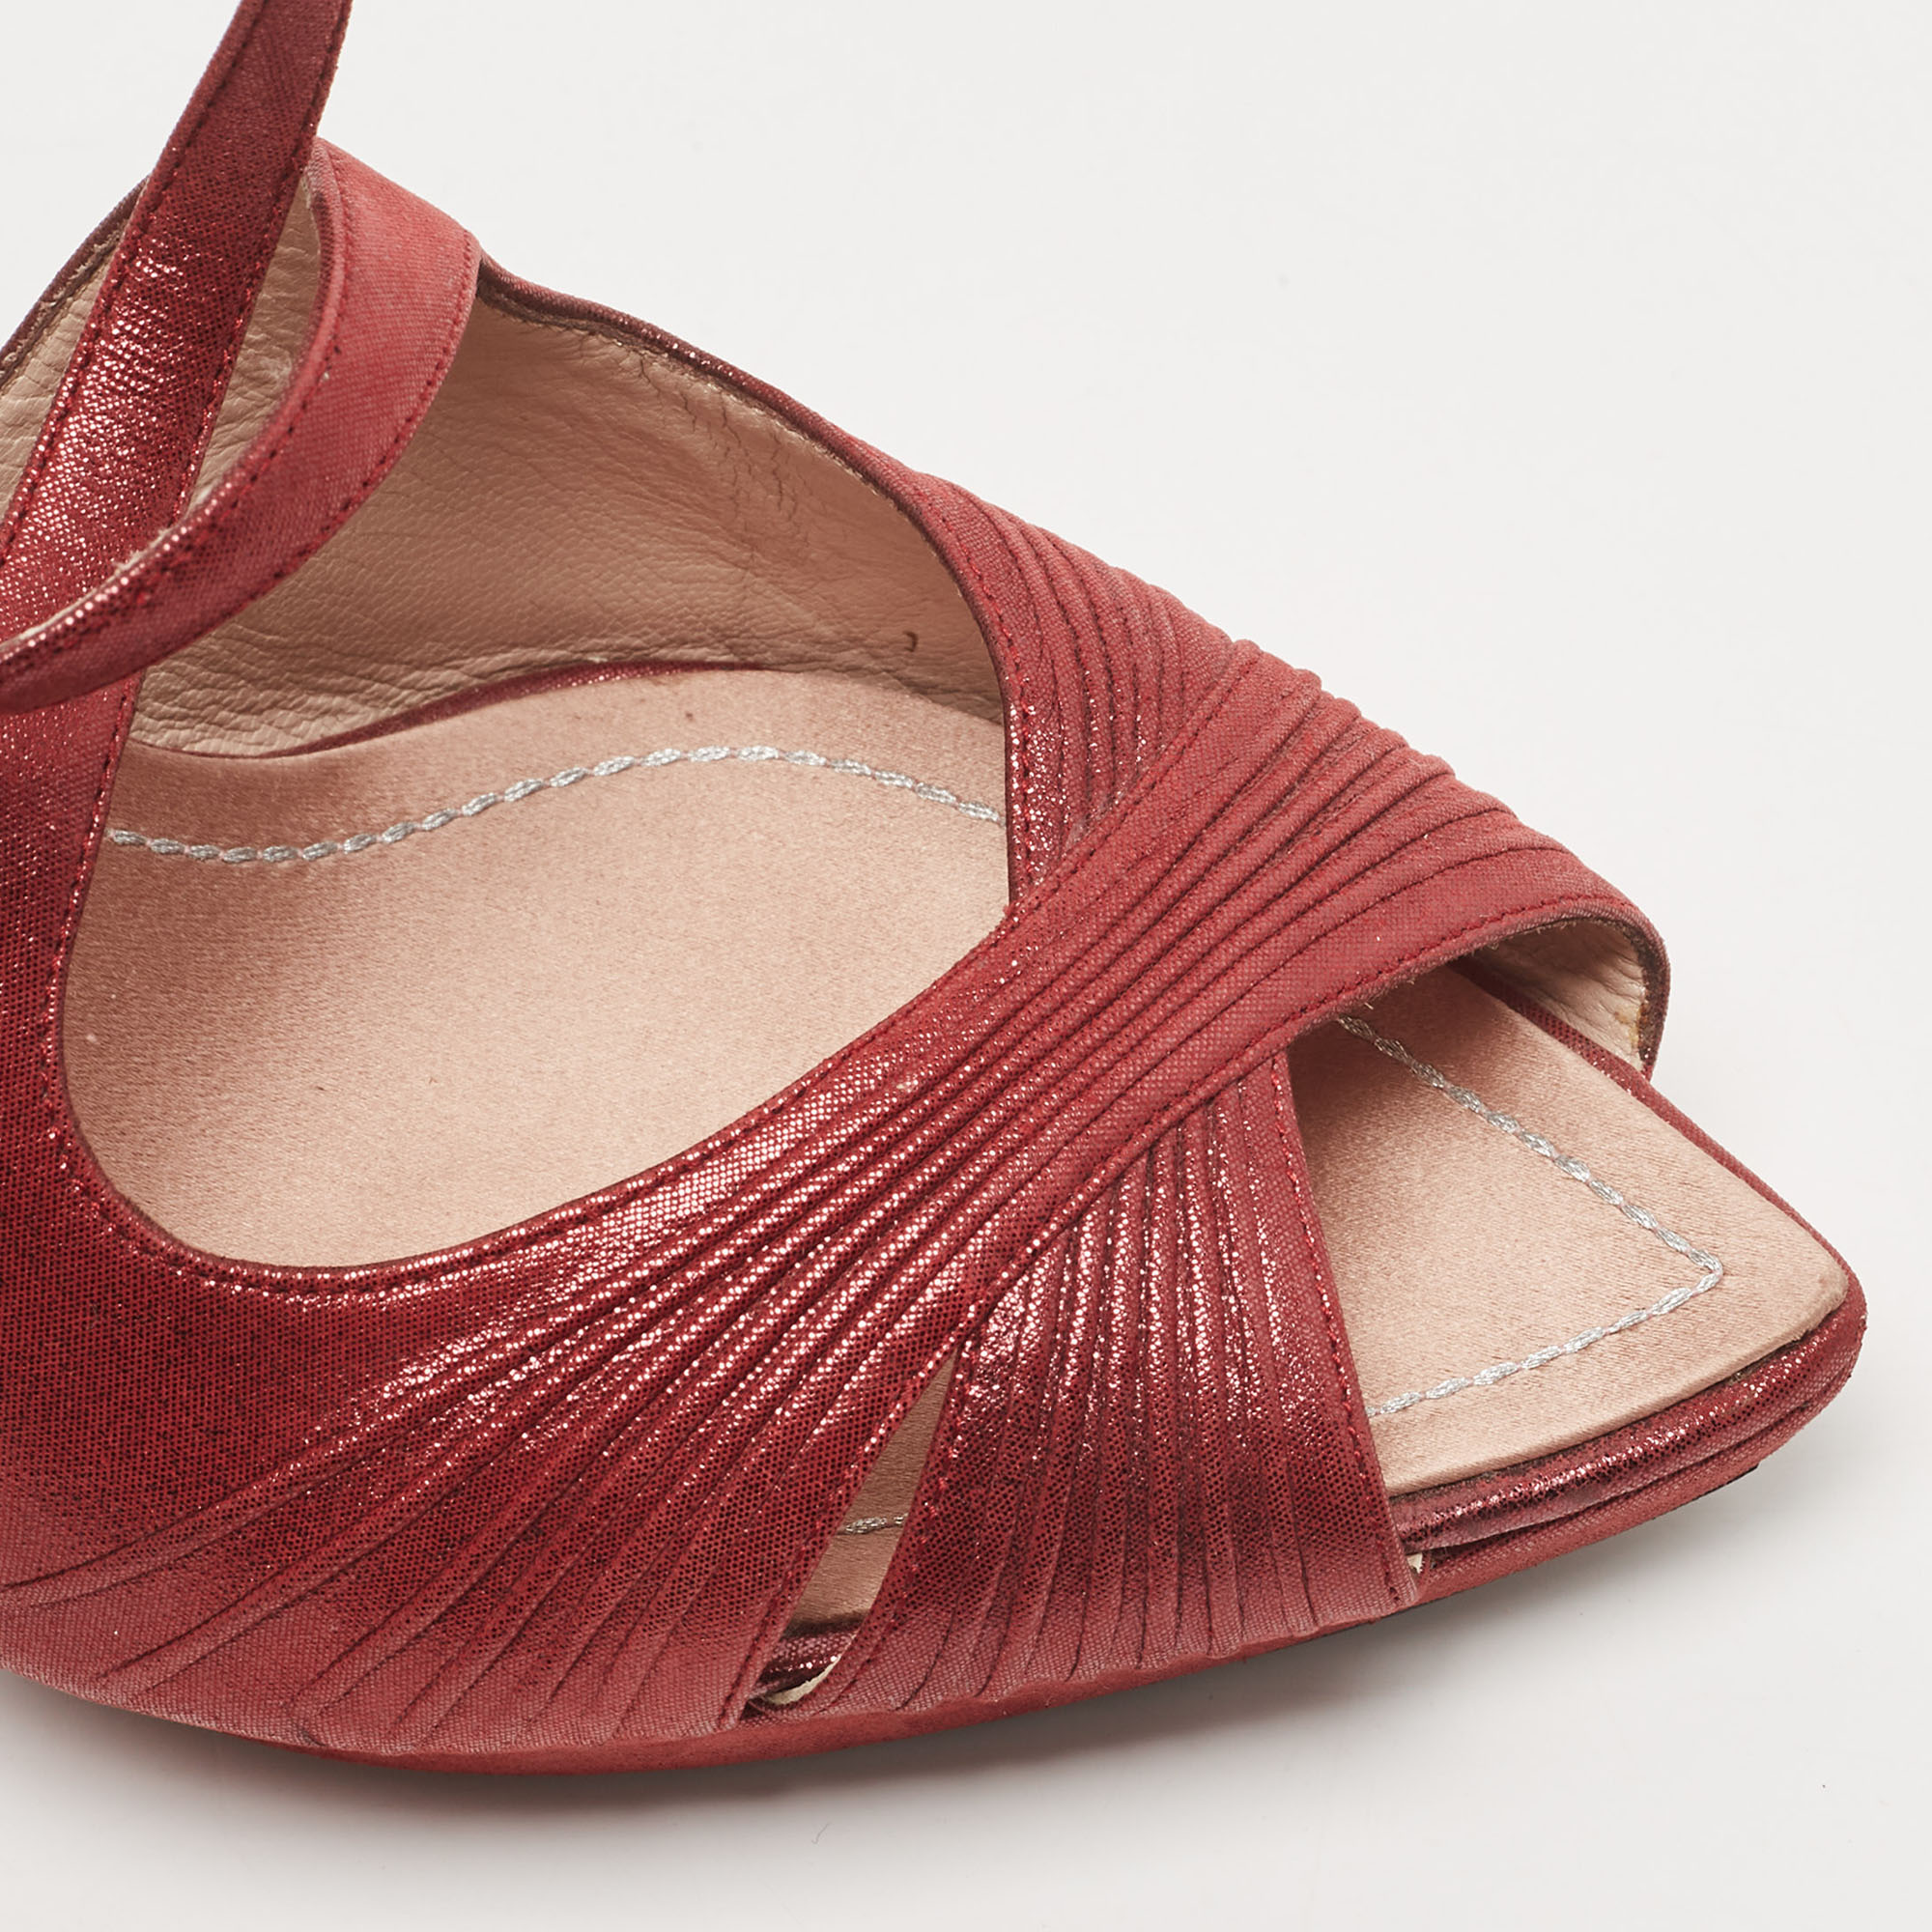 René Caovilla Burgundy Glitter Suede Platform Ankle Strap Sandals Size 41